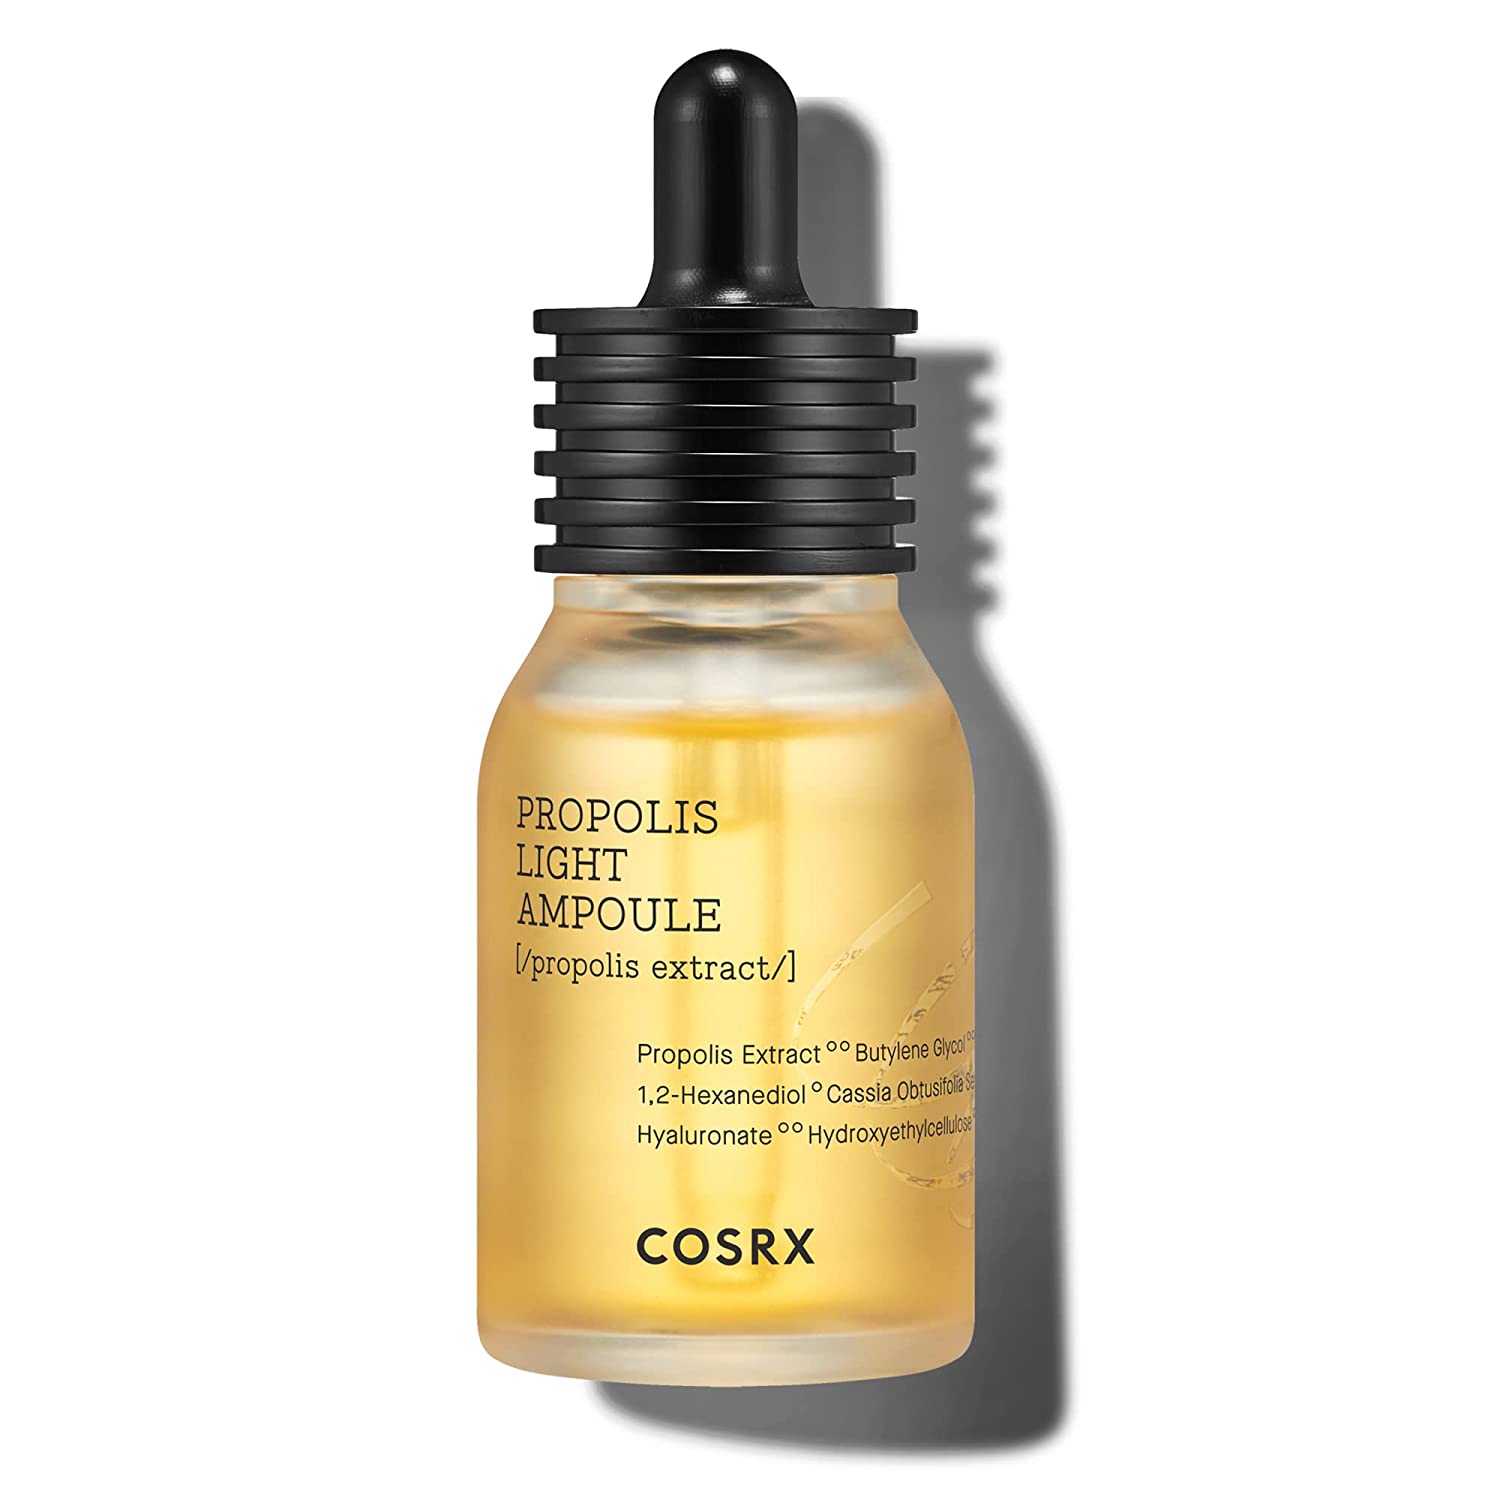 COSRX - Full Fit Propolis Light Ampoule 30 ml - سيروم شمع العسل من كوس آر اكس